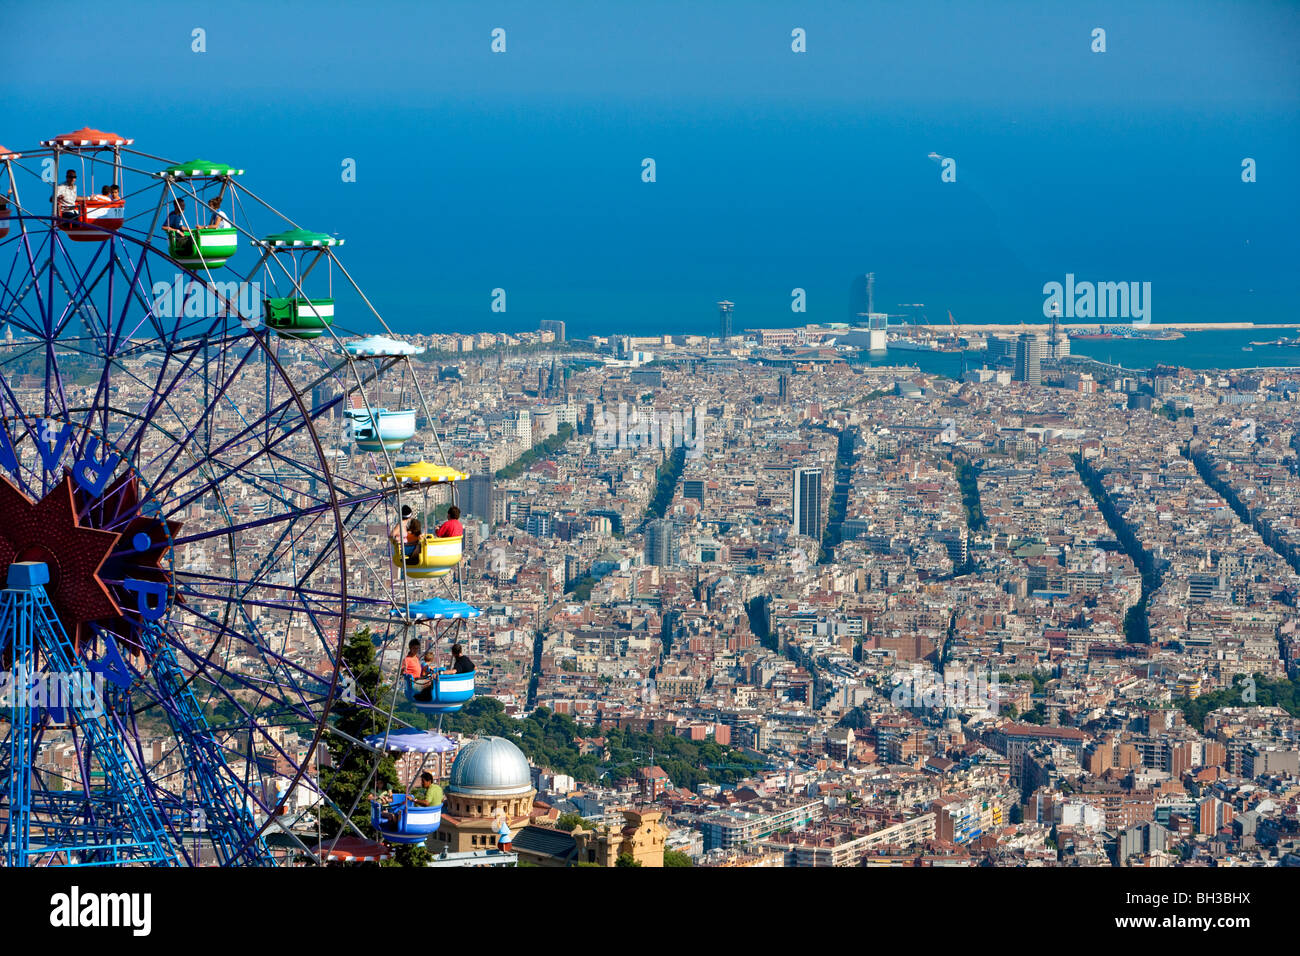 Barcelona - Tibidabo Amusement Park Stock Photo